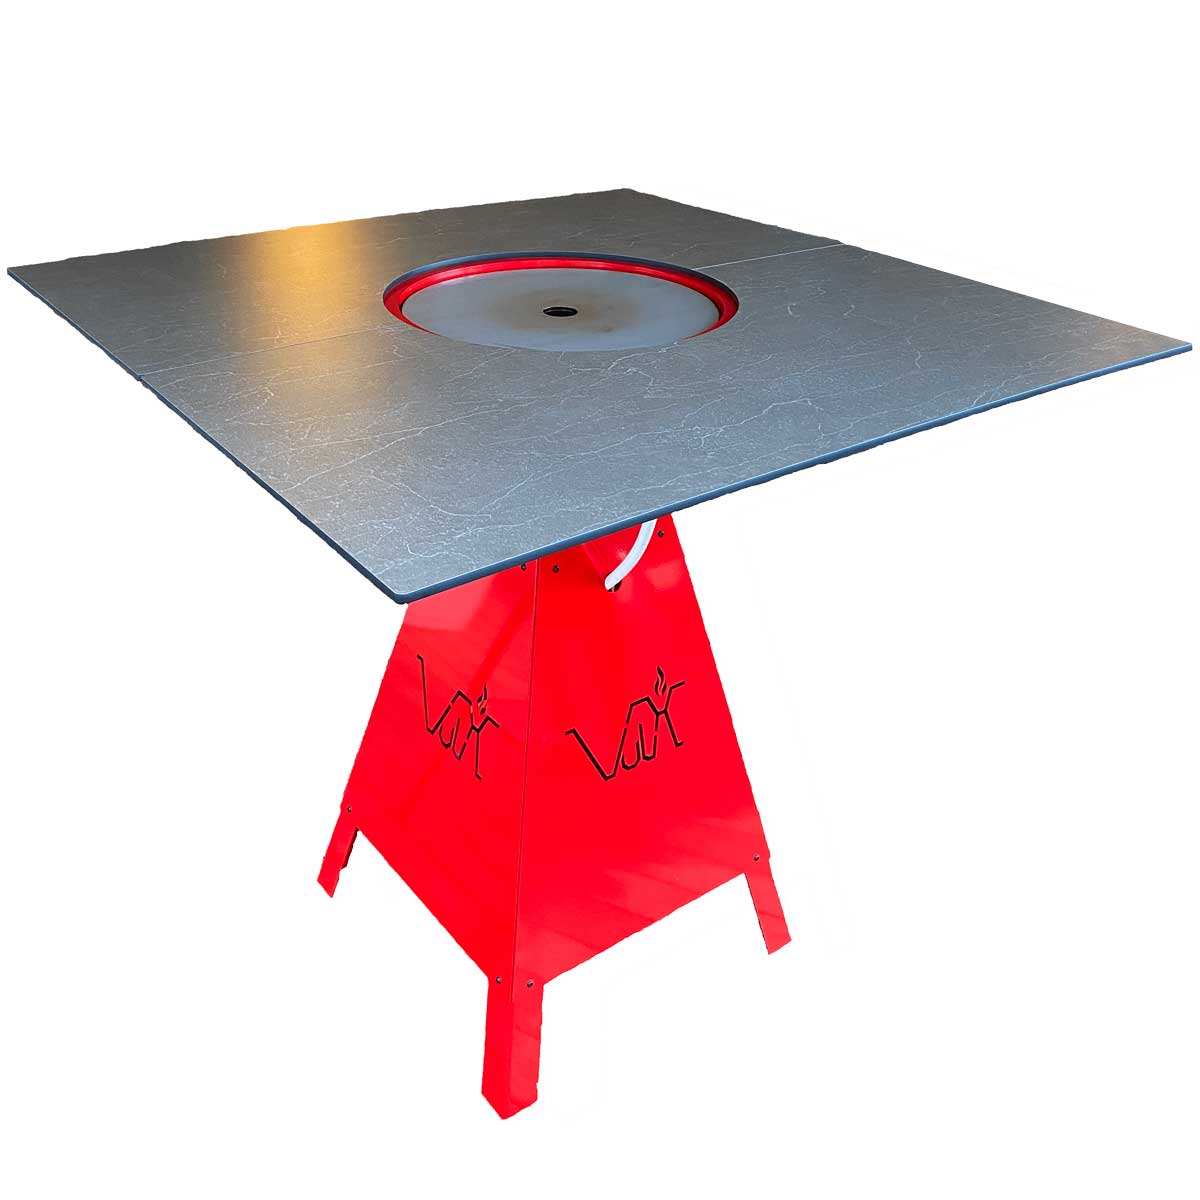 Table plancha/barbecue/braséro VULX MAGMA avec plateau carré